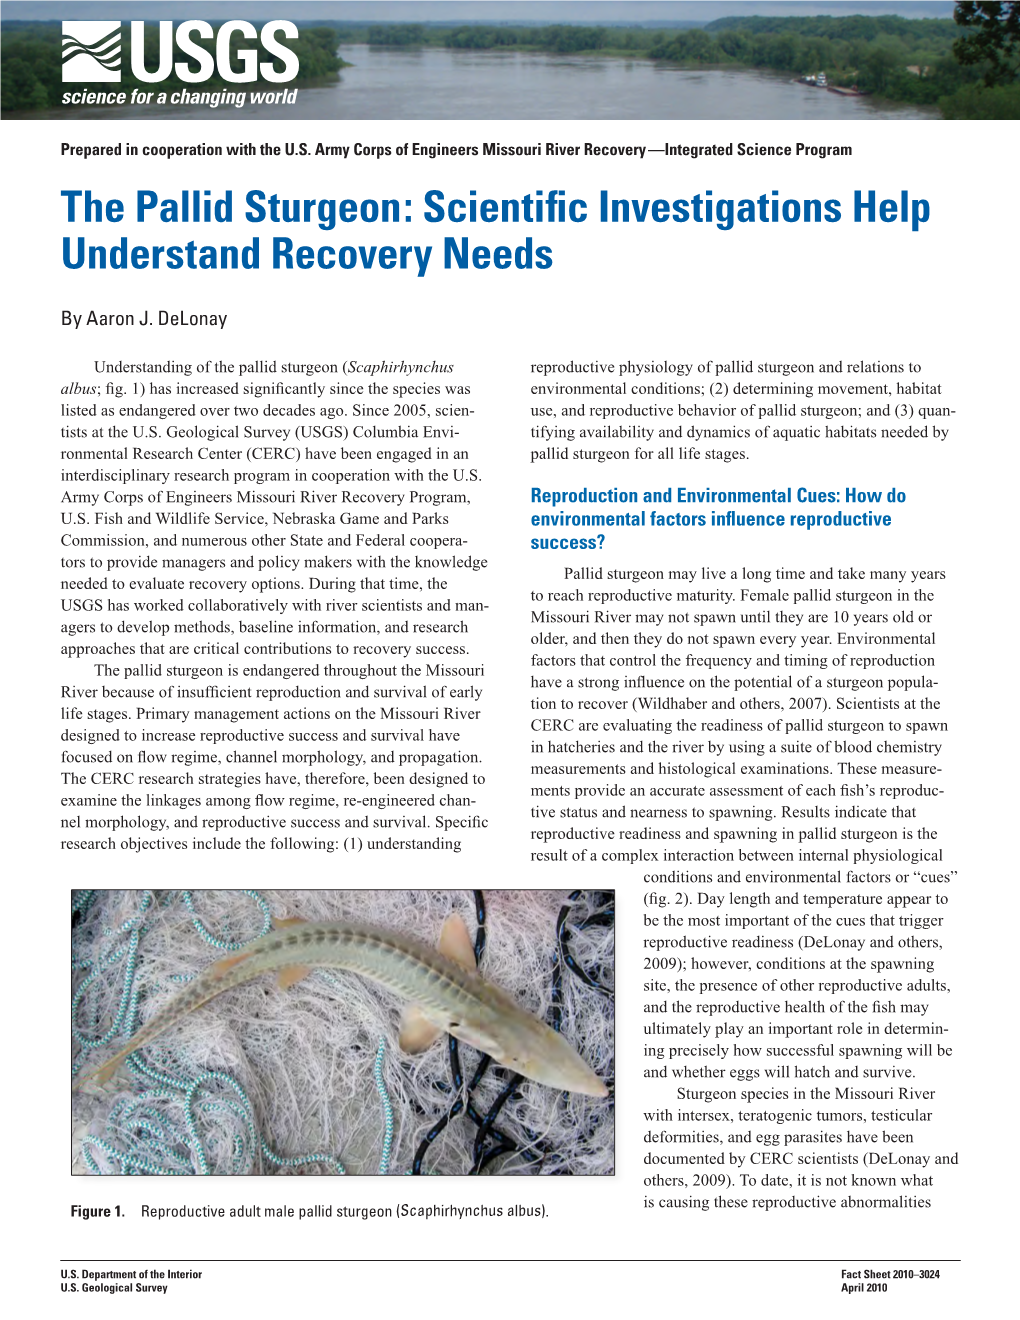 The Pallid Sturgeon: Scientific Investigations Help Understand Recovery Needs